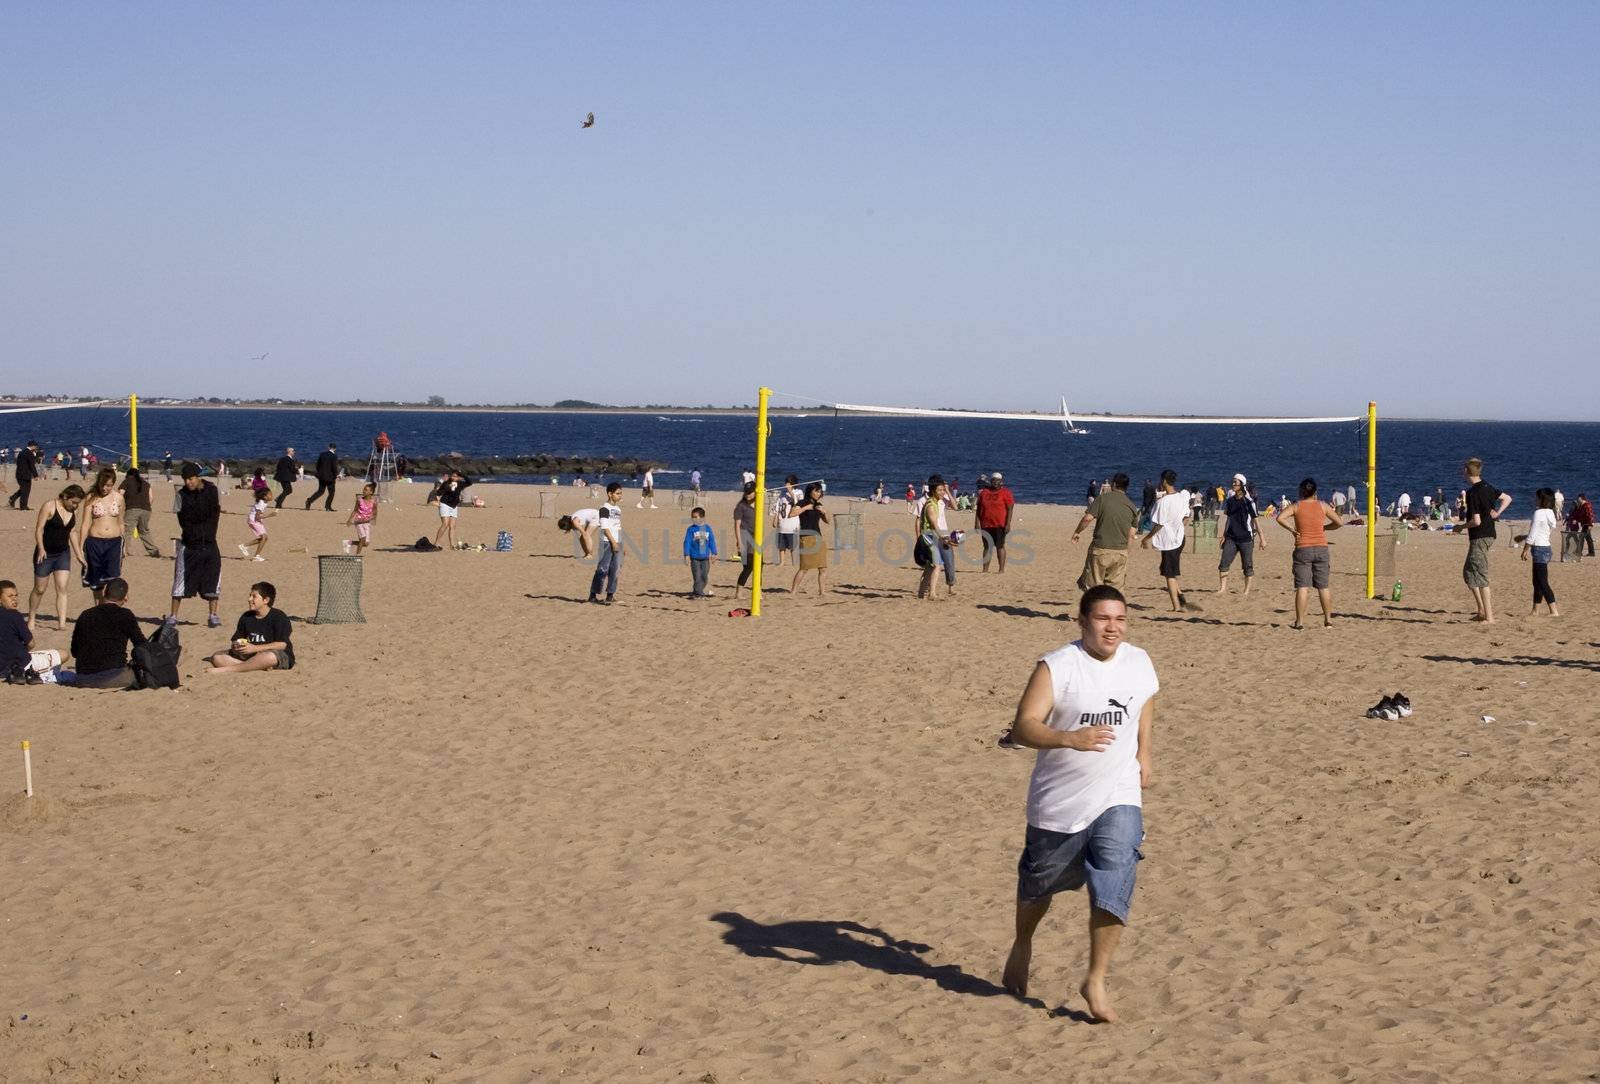 Volleyball at Coney Island by patballard